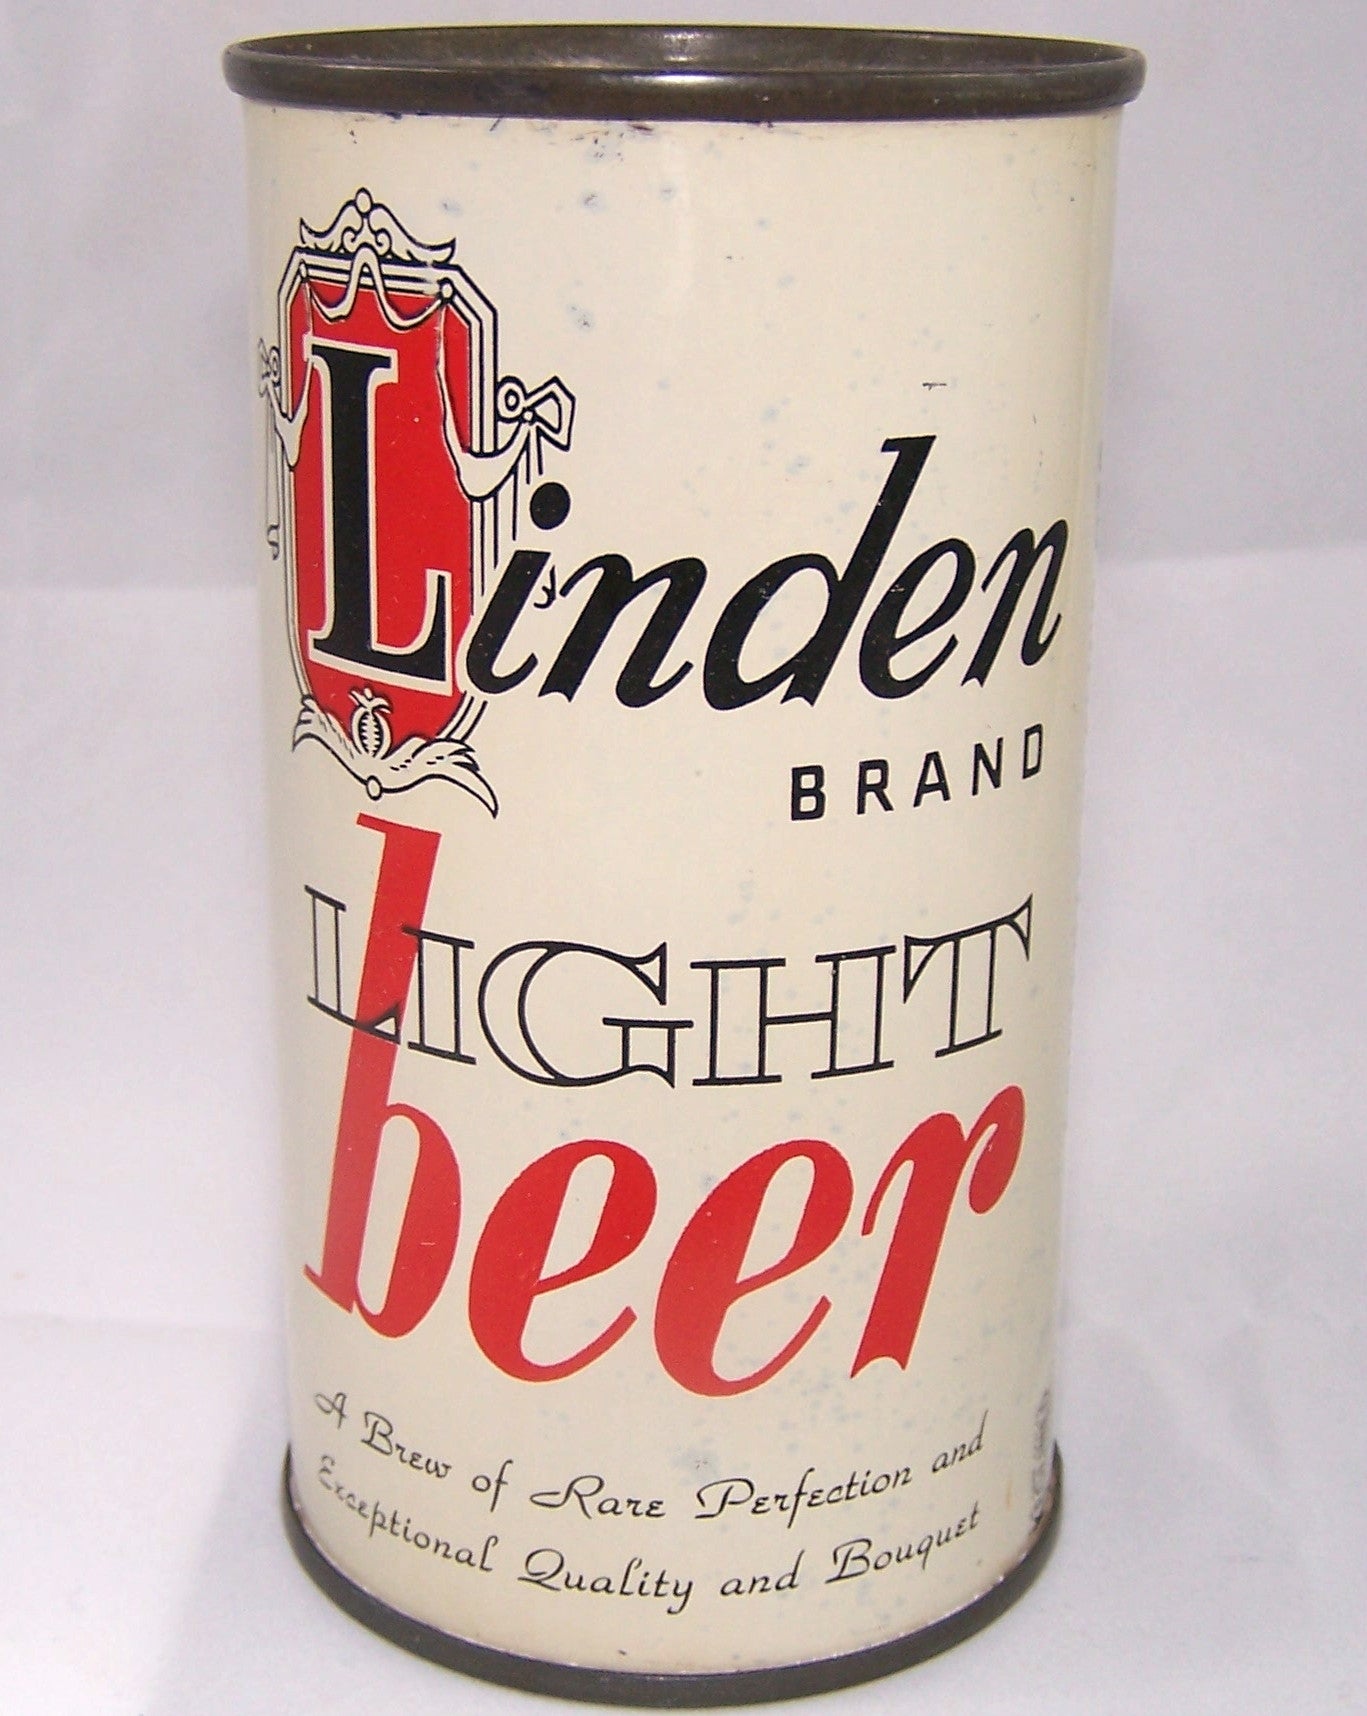 Linden Light Beer, USBC 91-29, Grade 1/1-